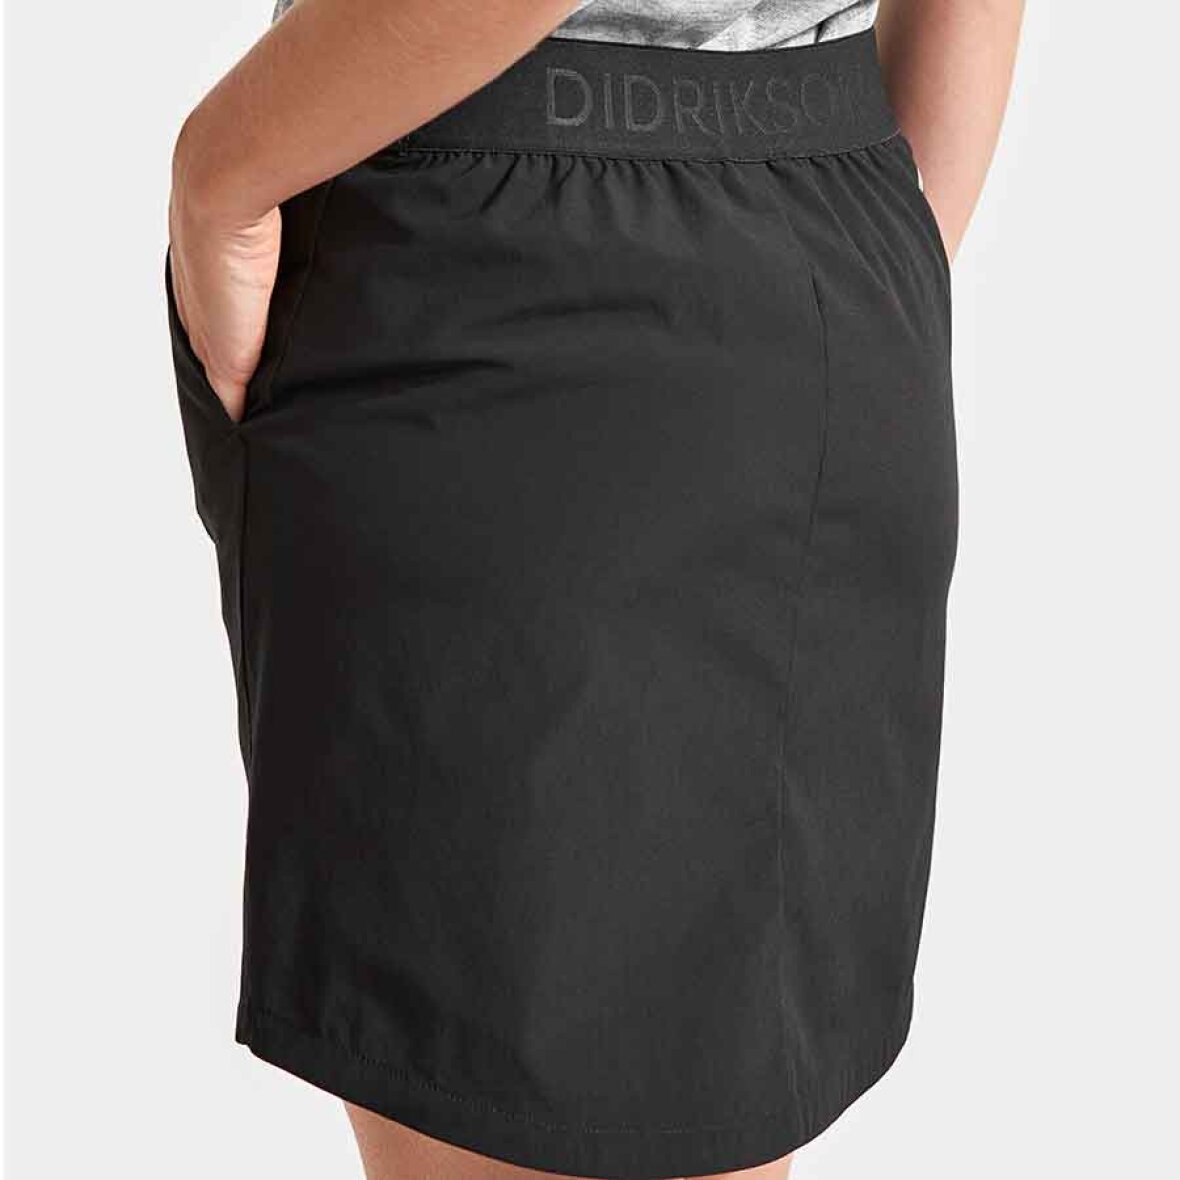 Liv Skirt Didriksons: nederdel. og praktisk mere her! Stilfuld Se